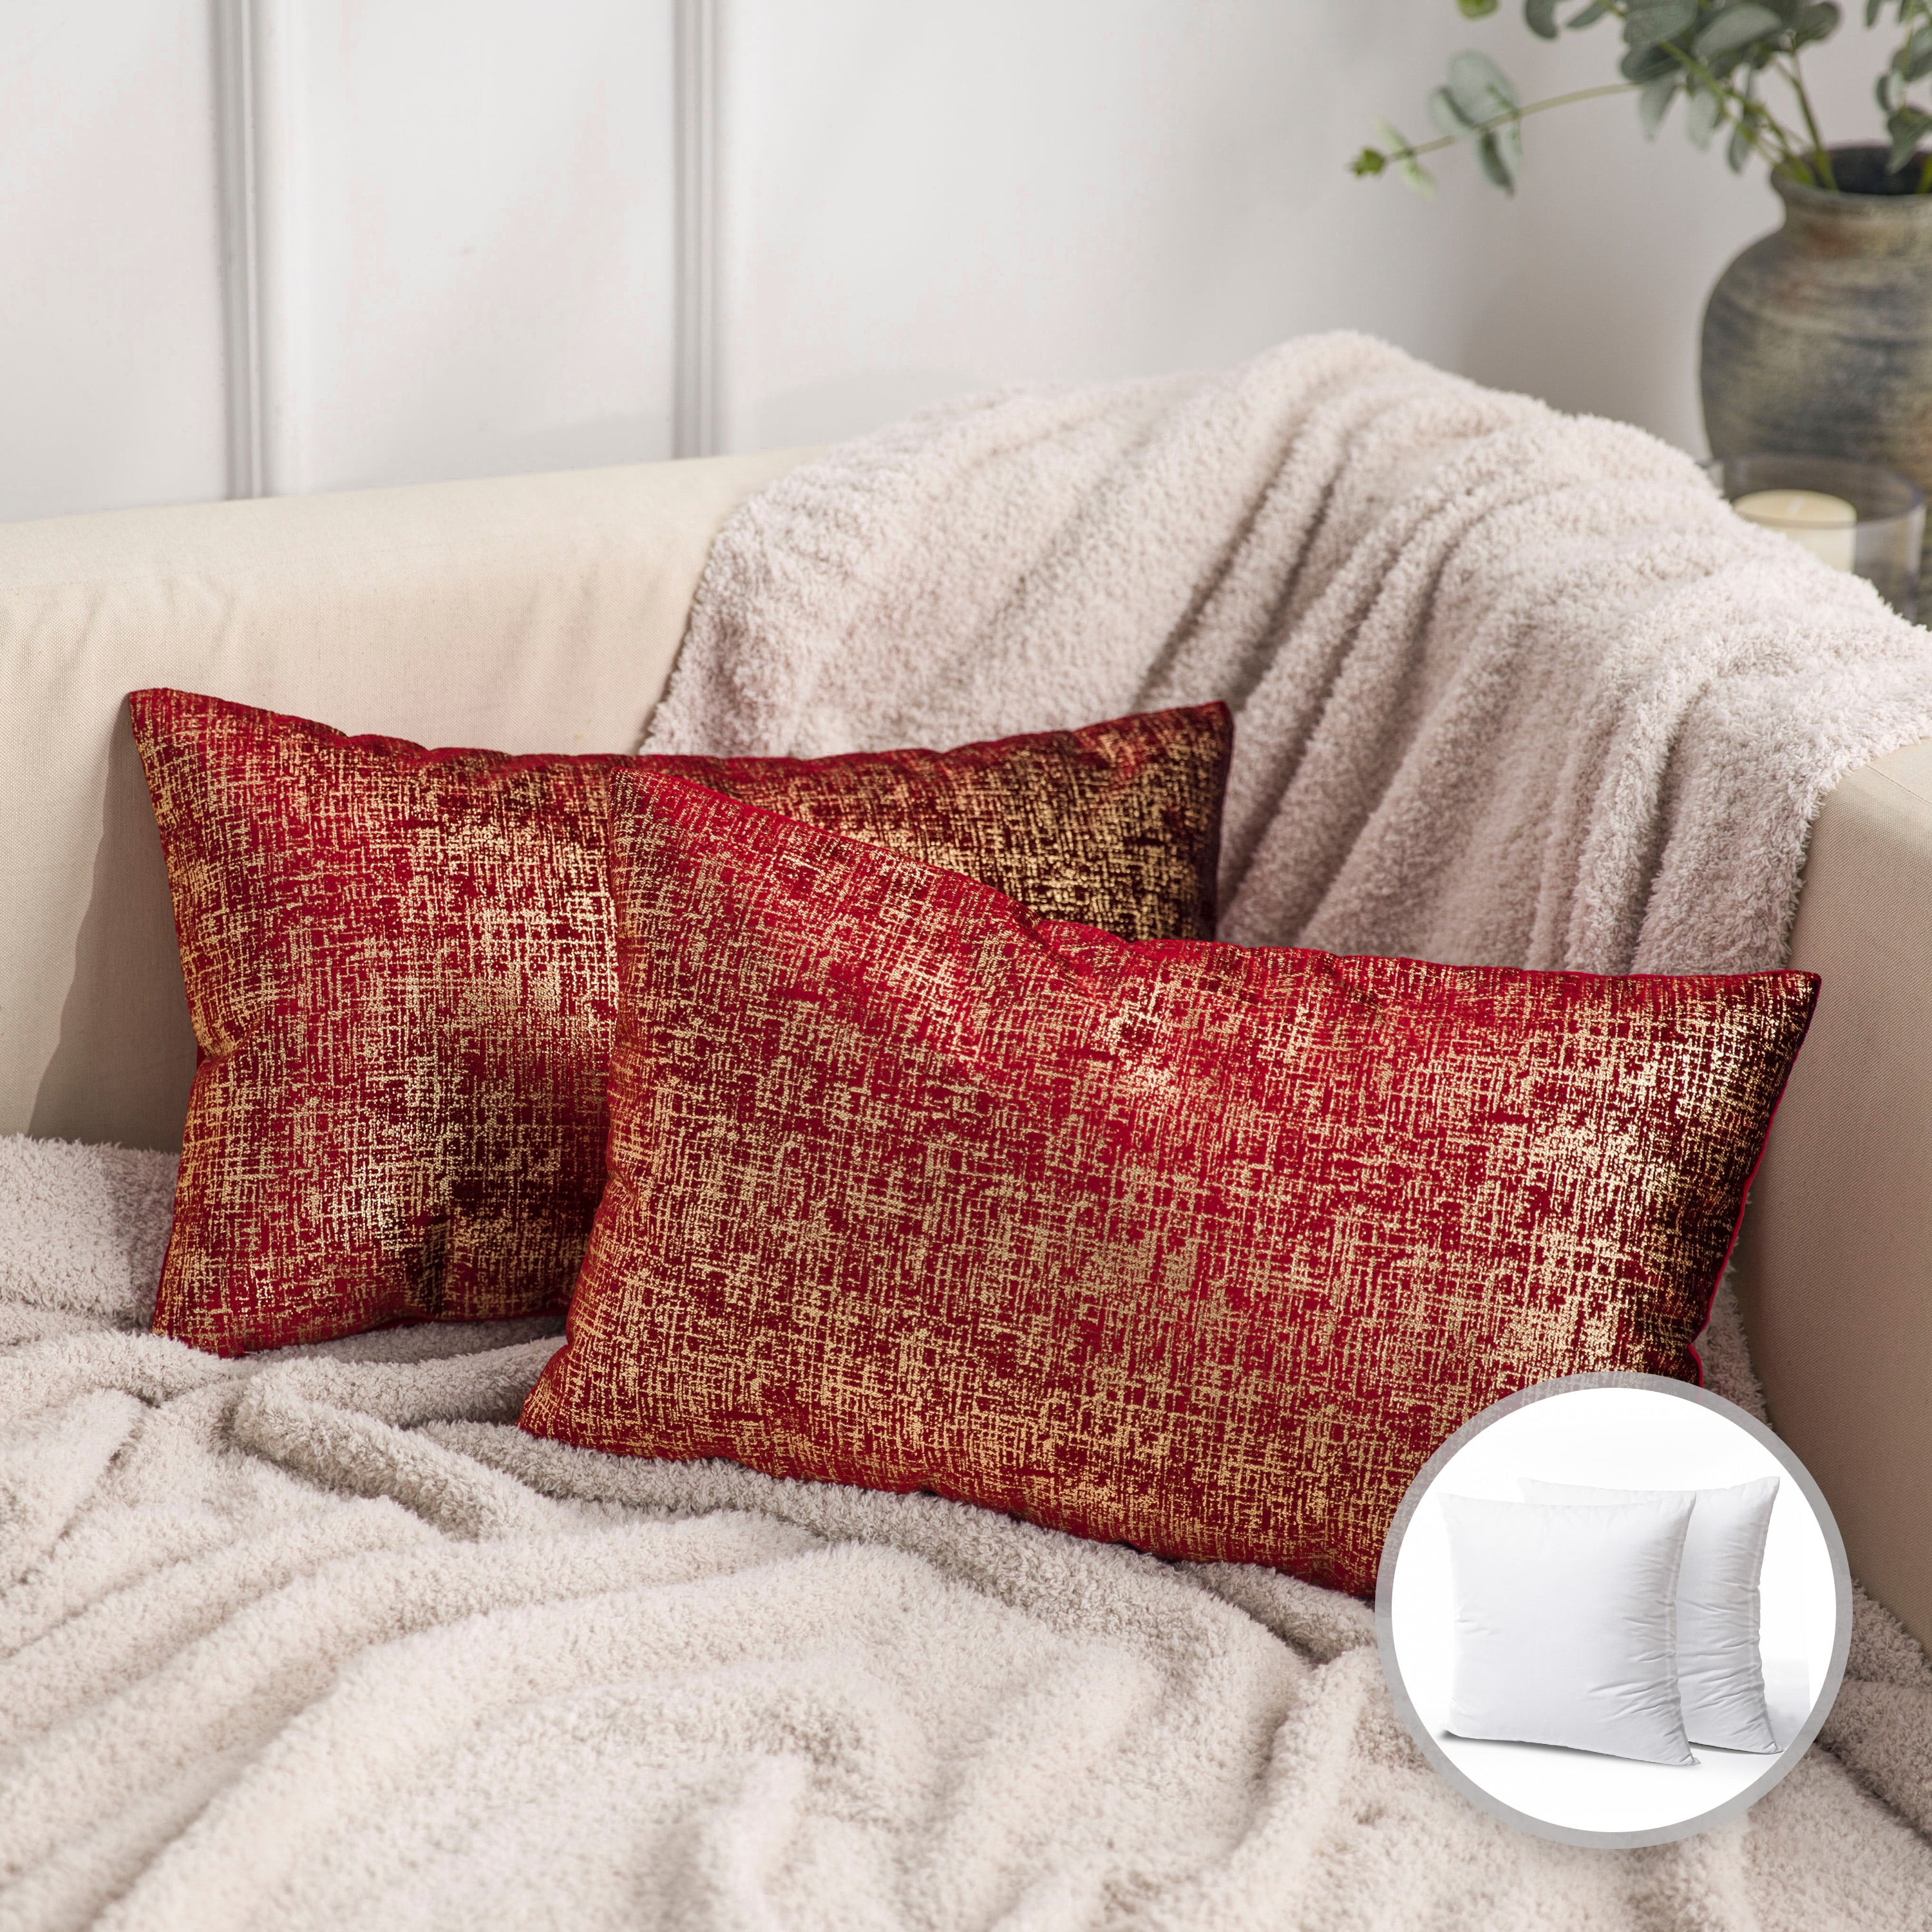 Phantoscope Boho Woven Cross Tufted Series Decorative Throw Pillow, 12 x  20, Gray/Beige, 1 Pack